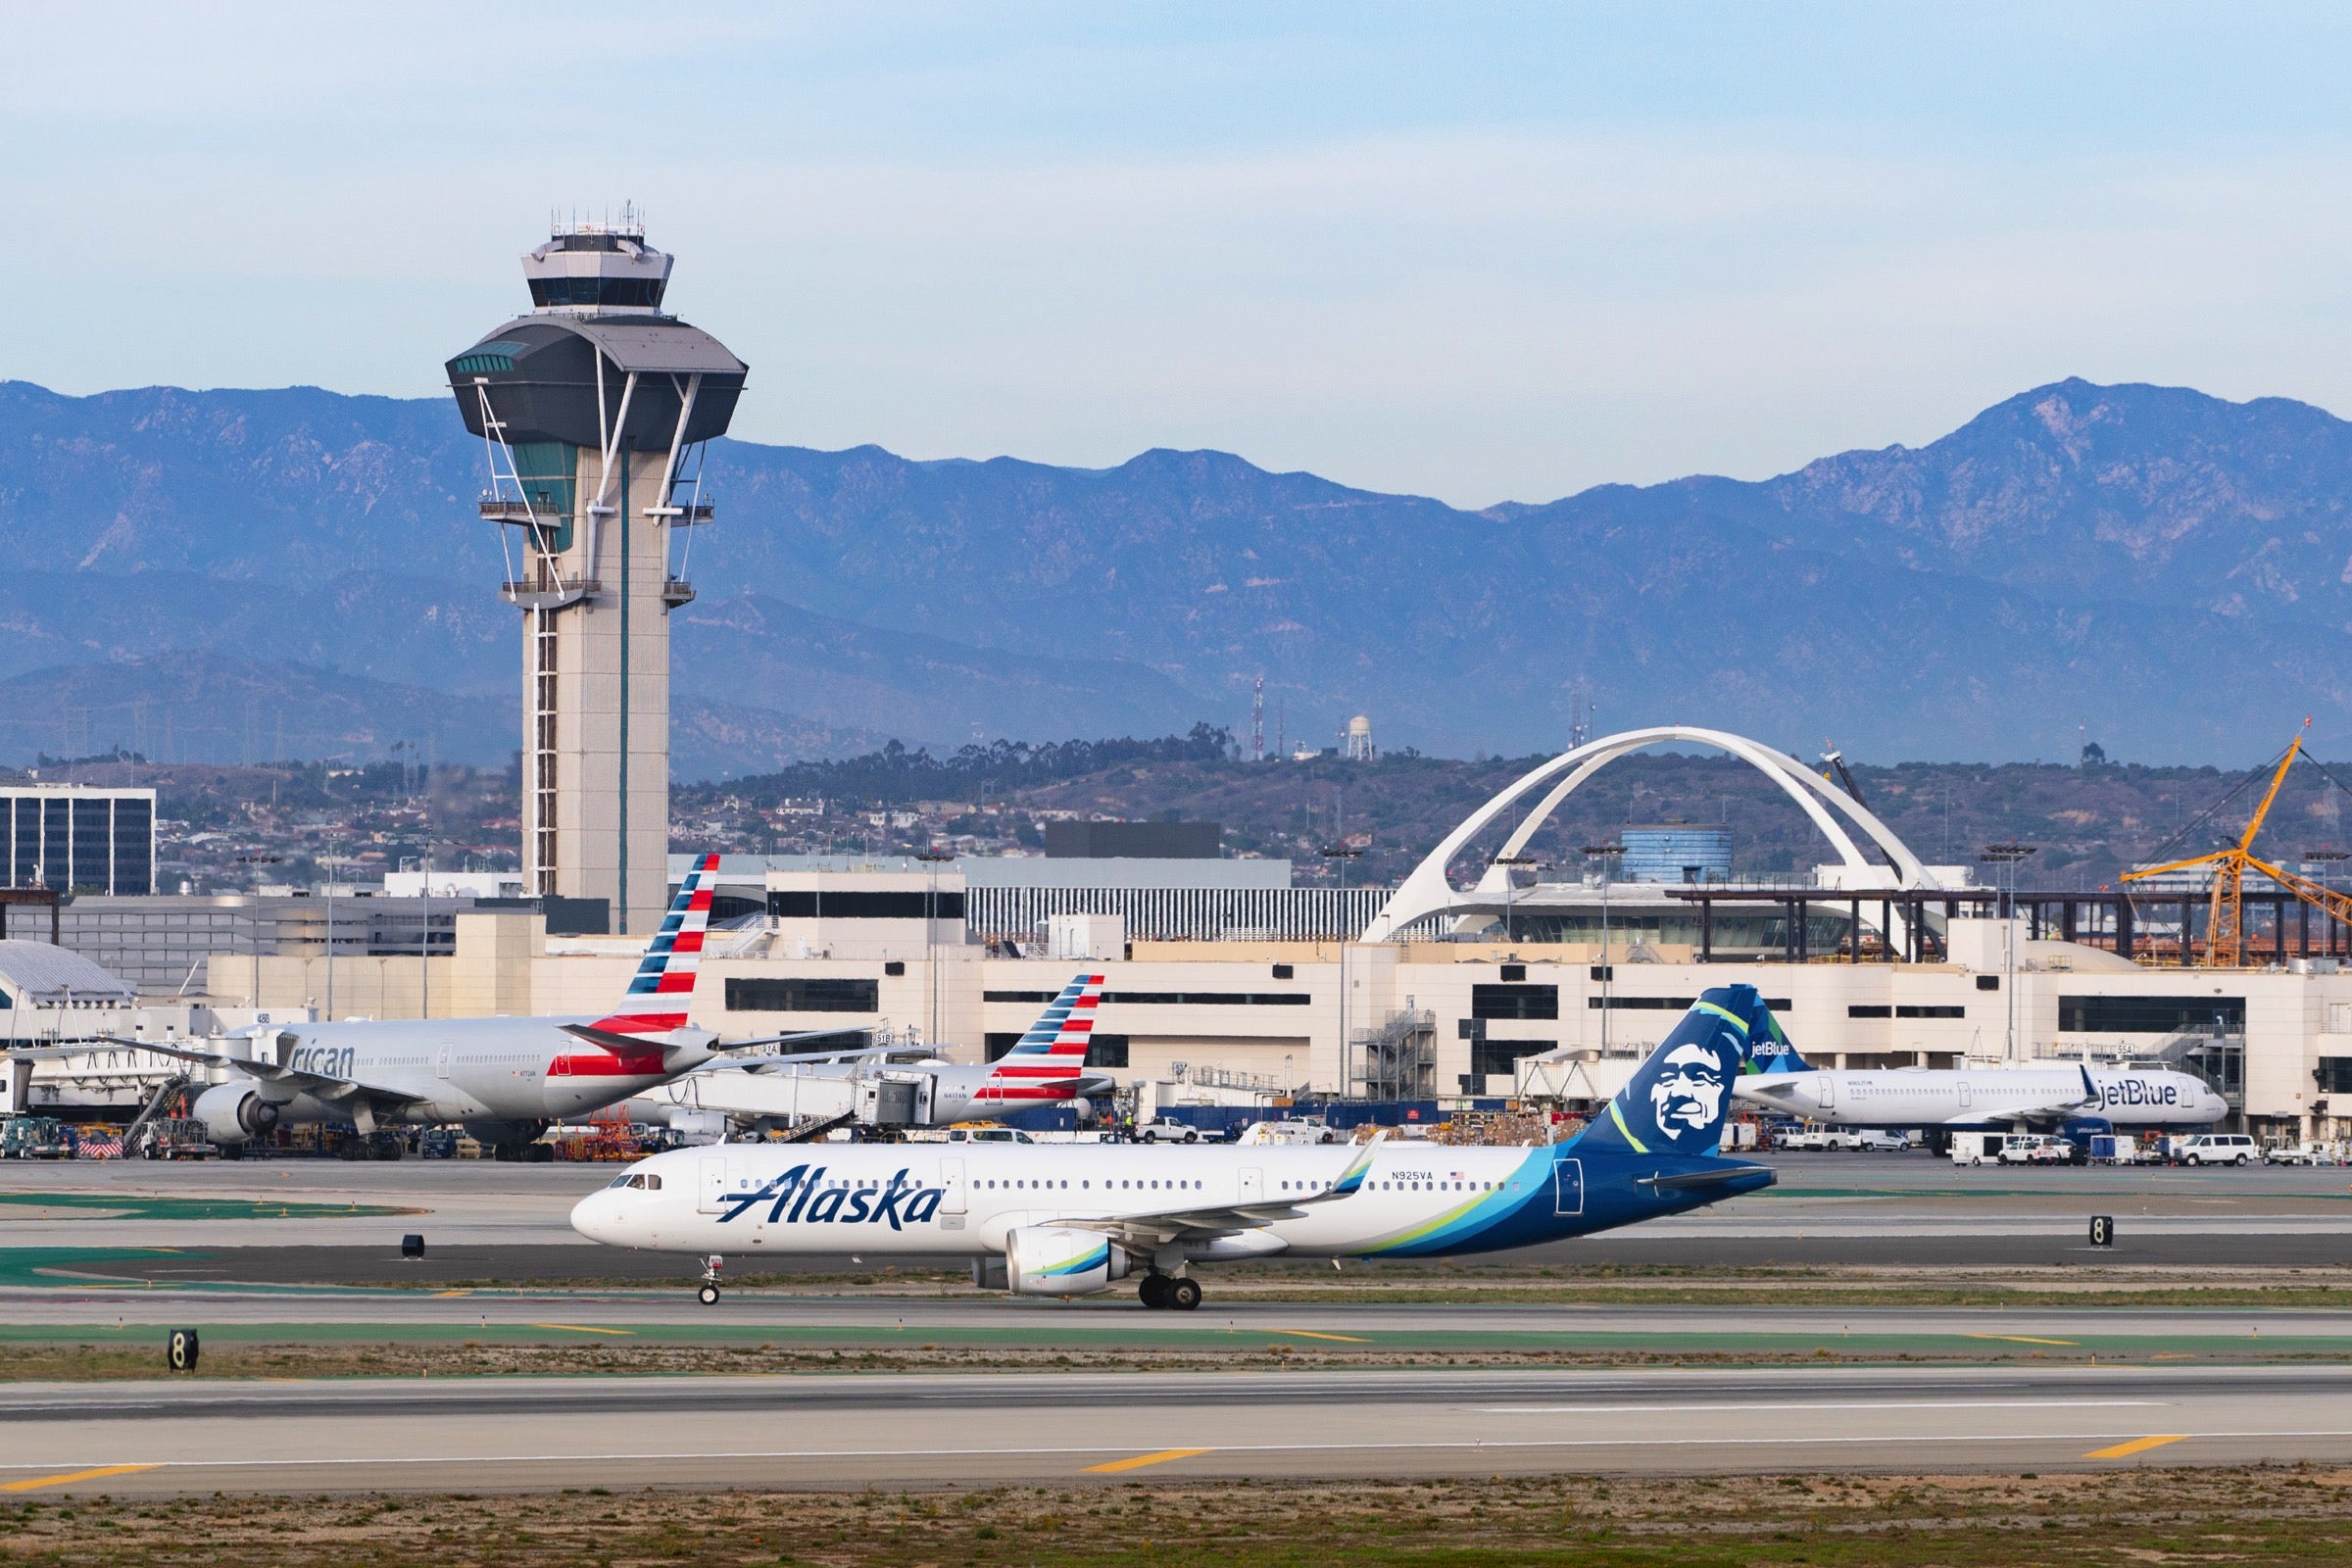 Alaska and American planes on the runway at LAX